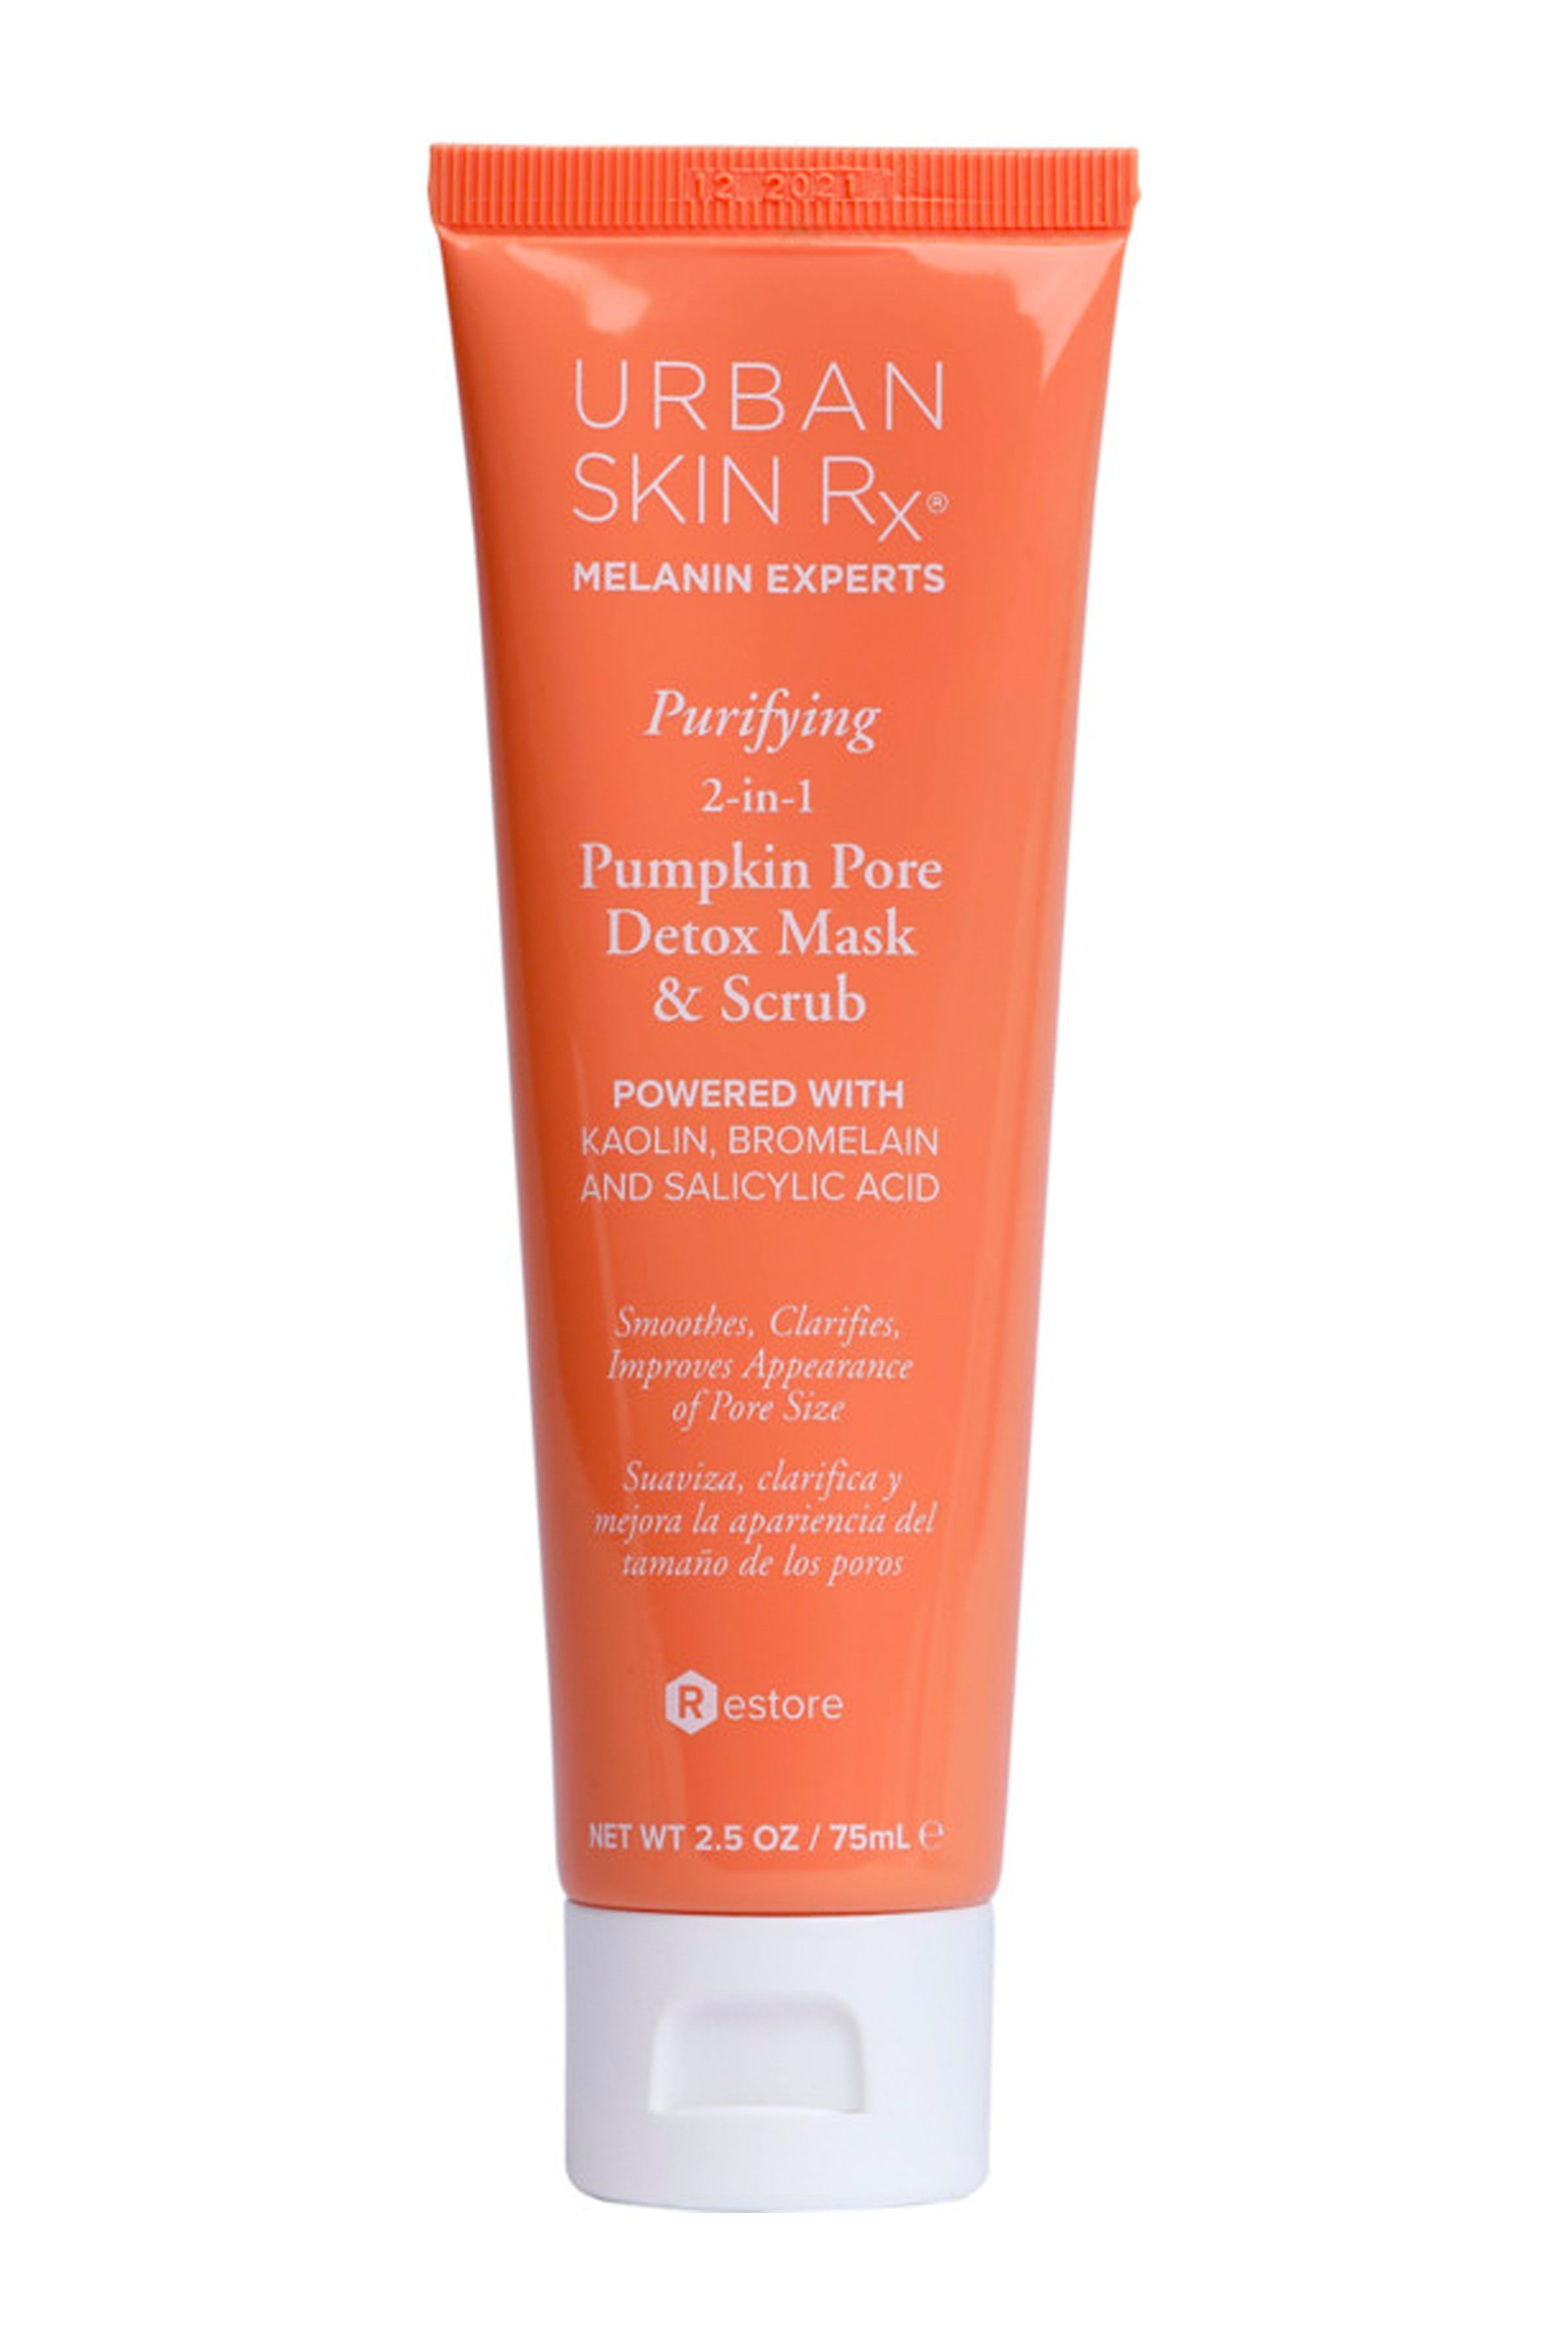 Purifying 2-in-1 Pumpkin Pore Detox Mask and Scrub